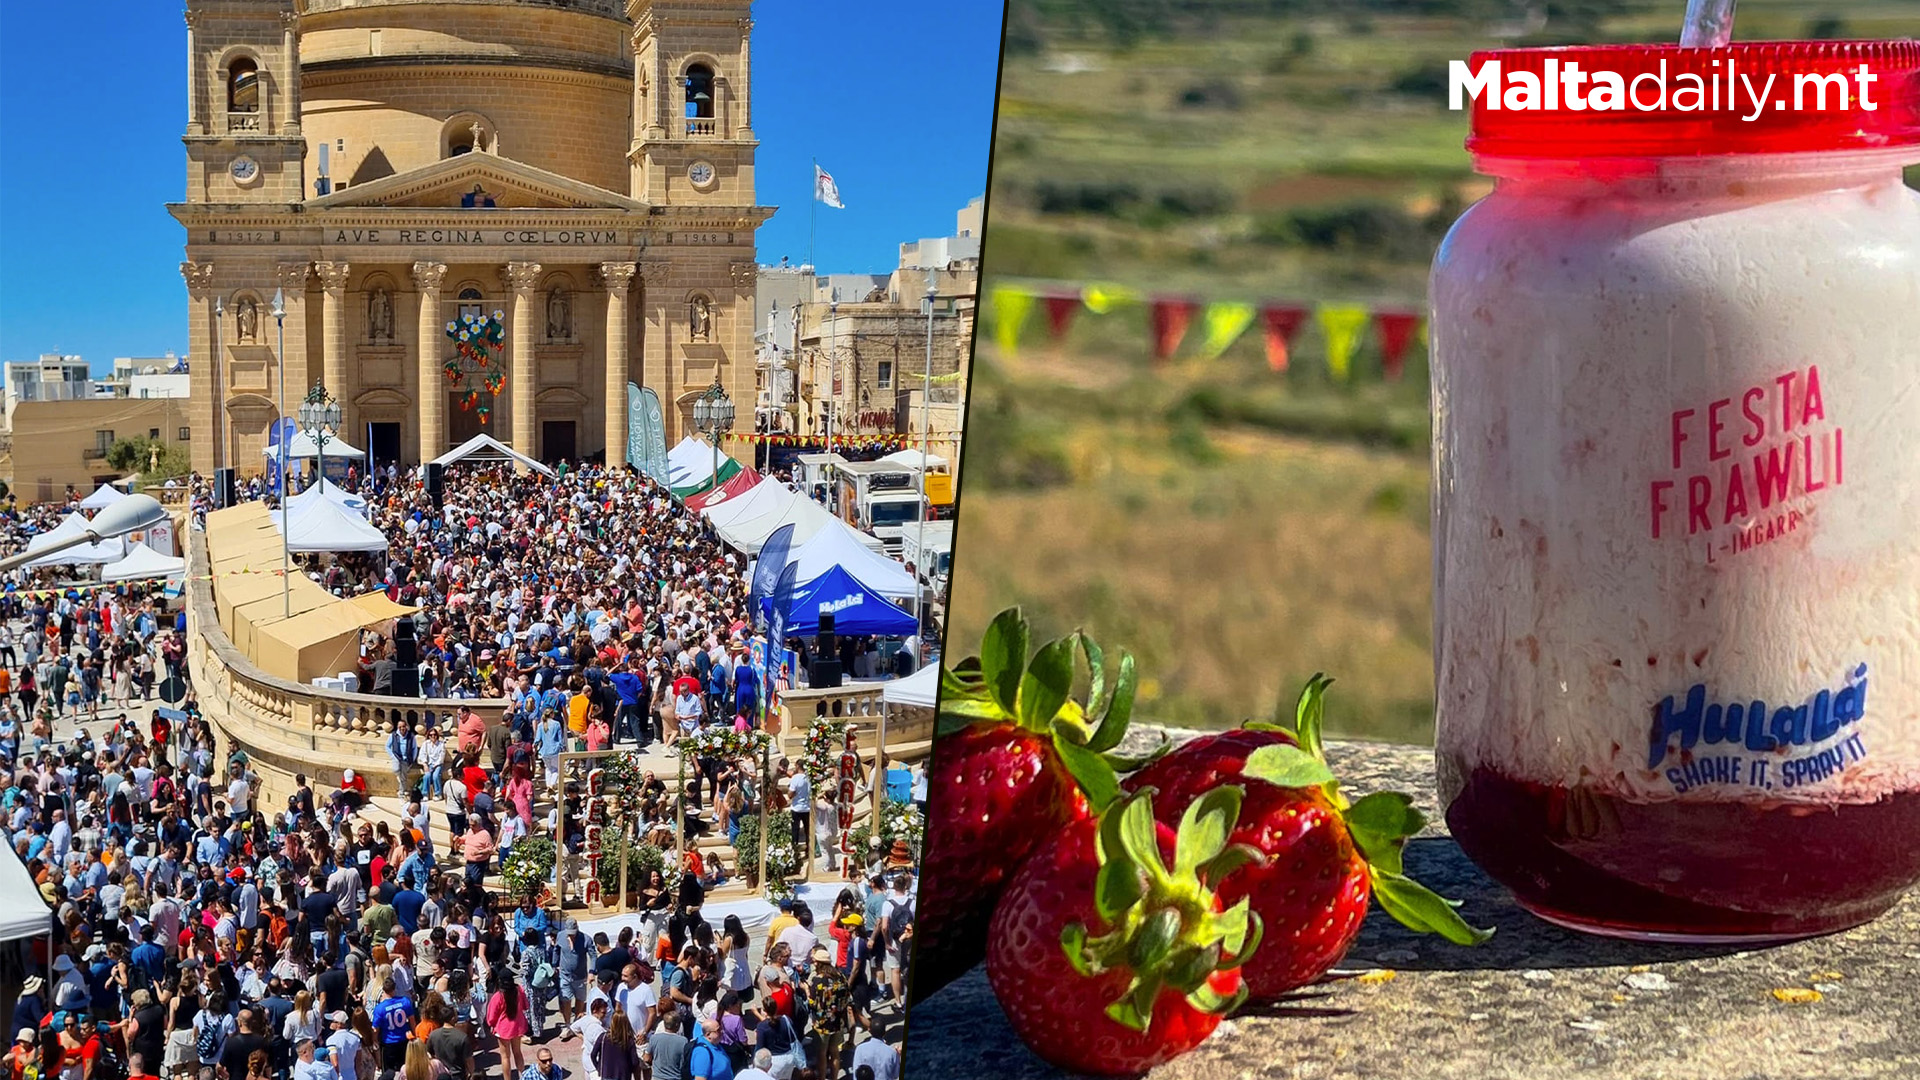 Thousands Attend Yearly Mġarr Festa Frawli